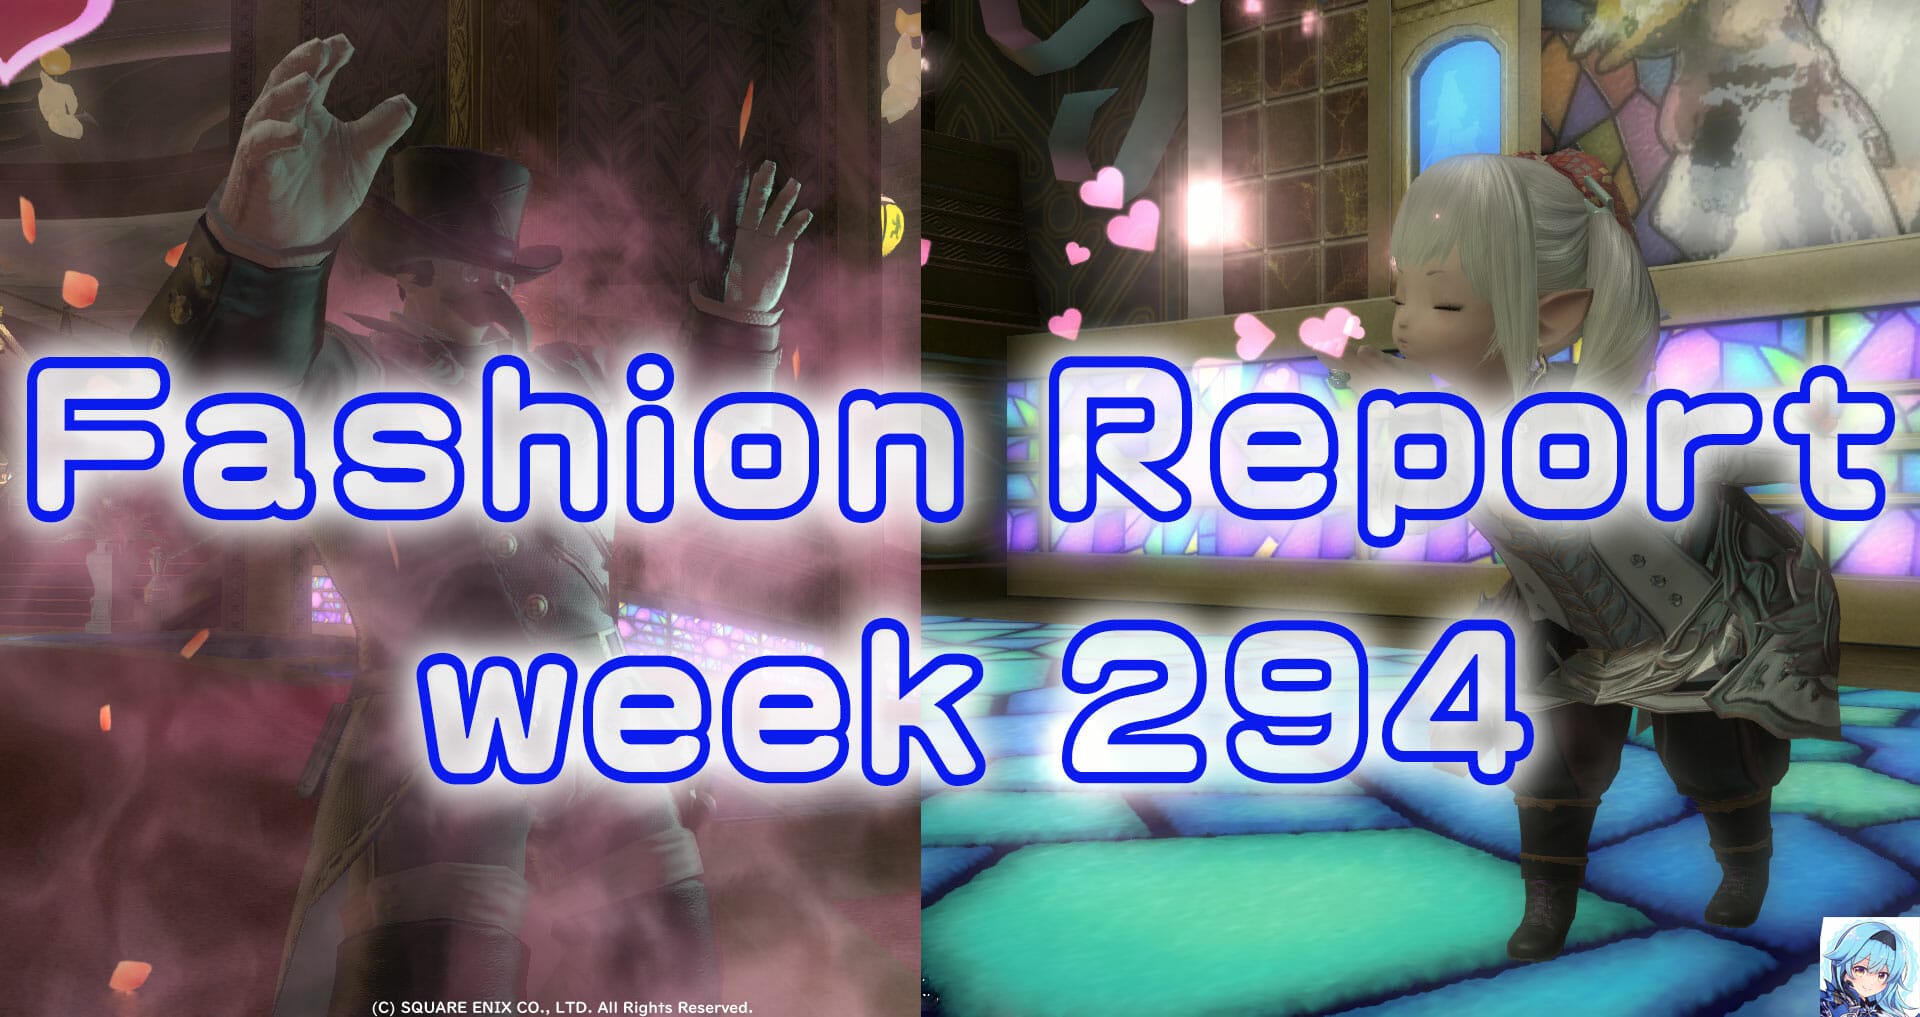 Fashion Report week 294